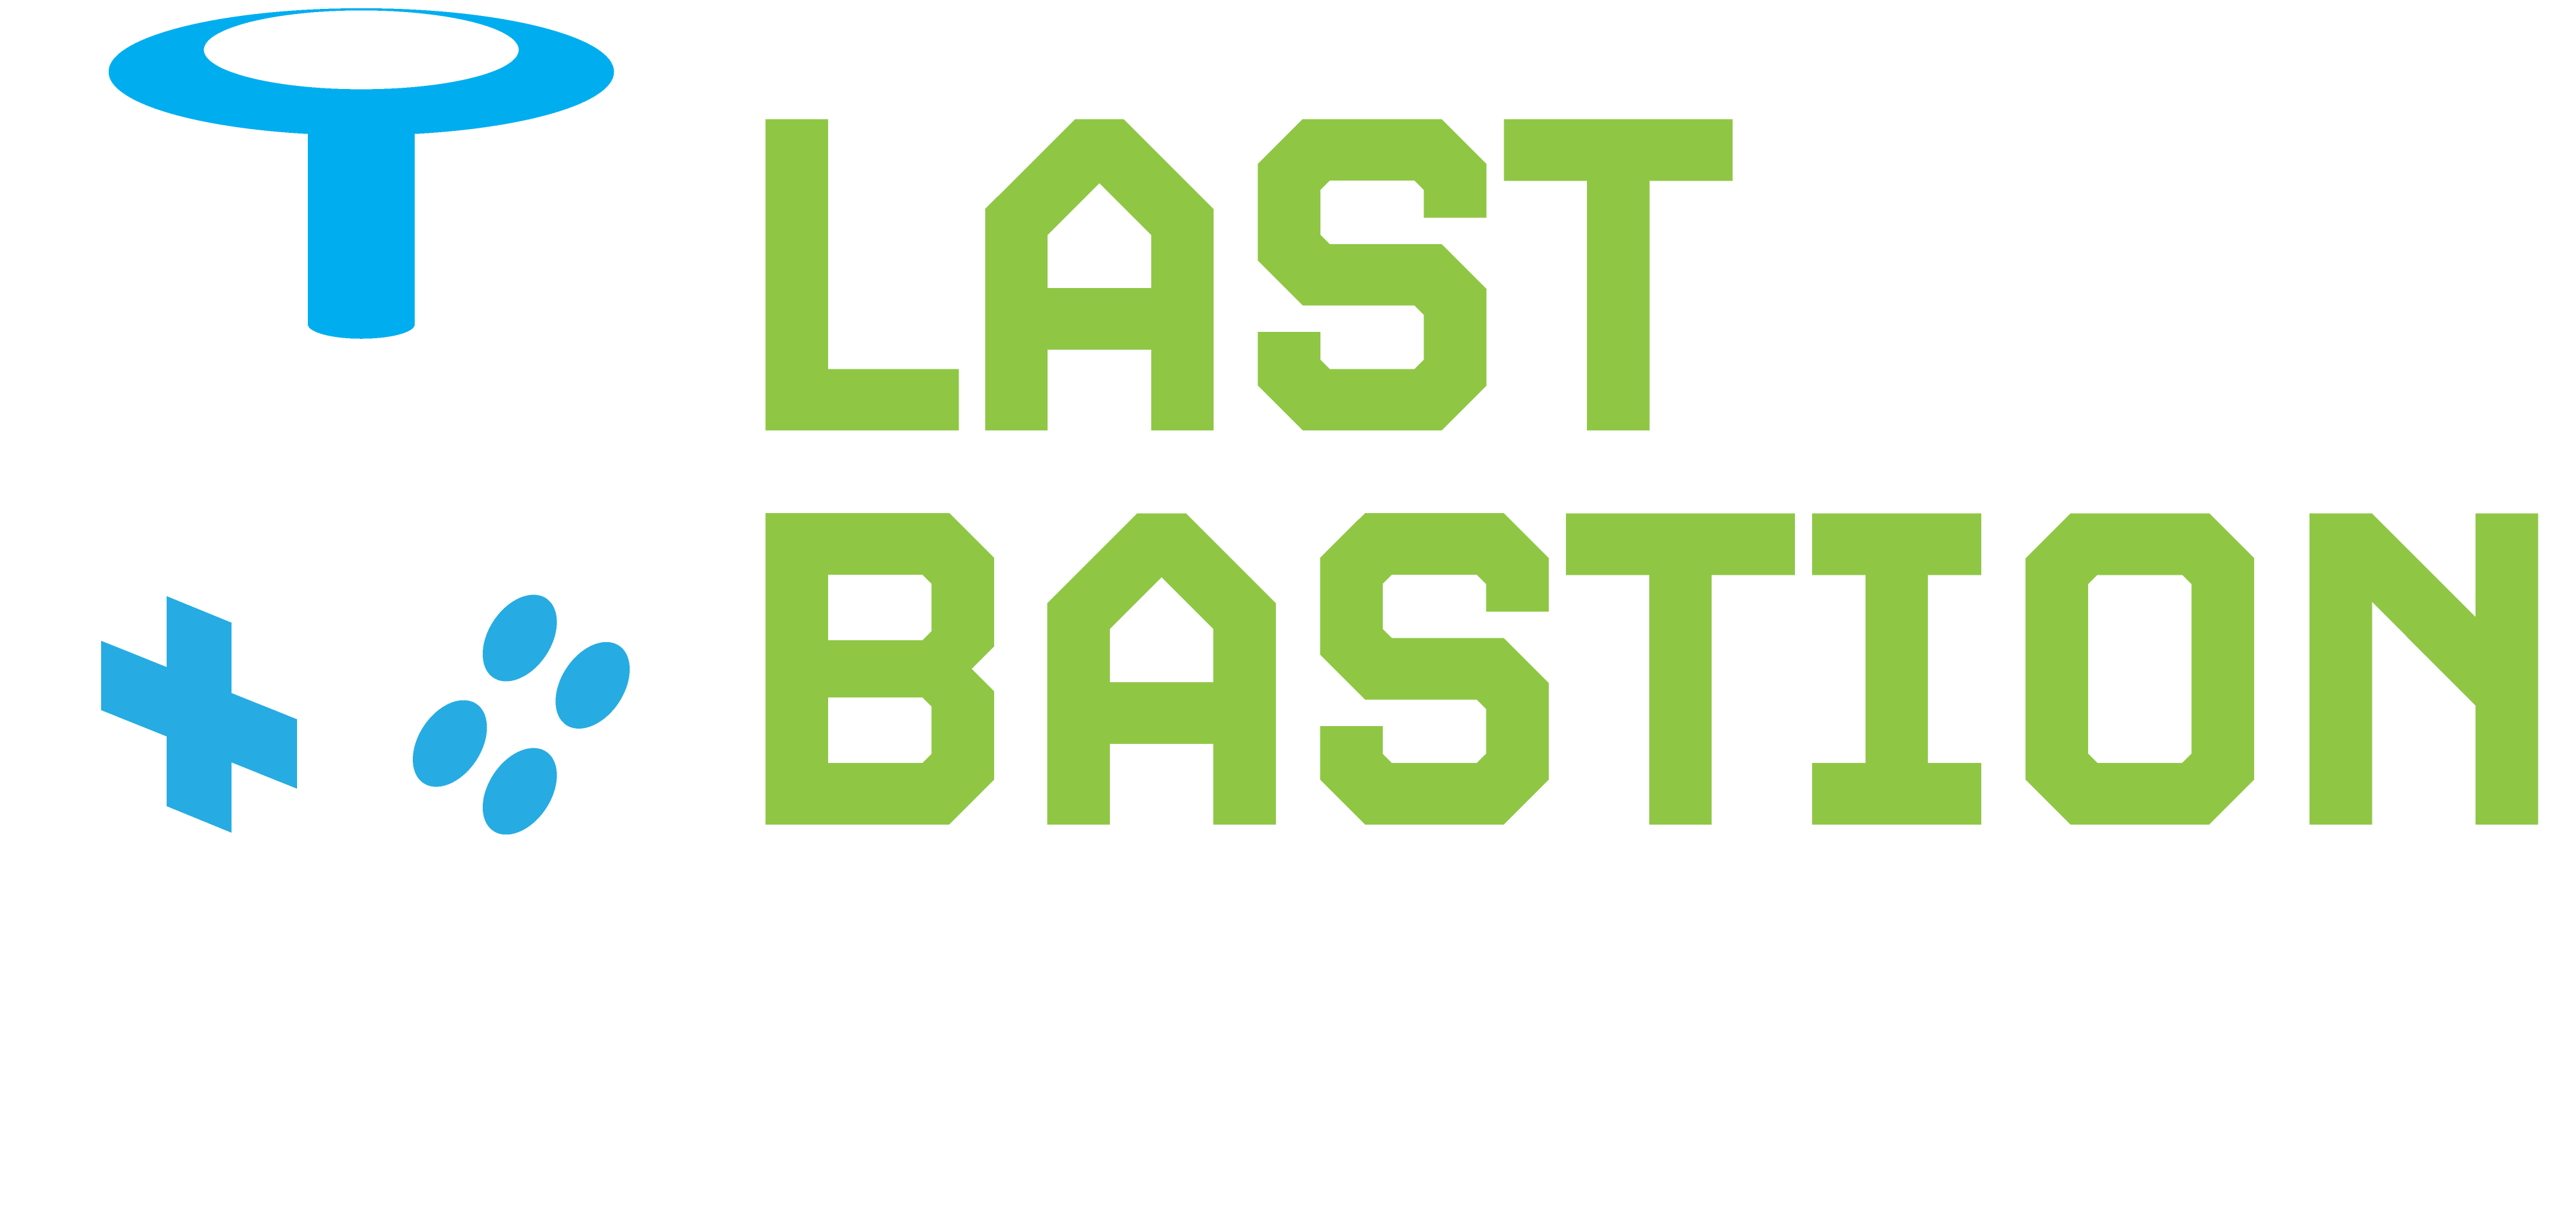 Last Bastion Gaming